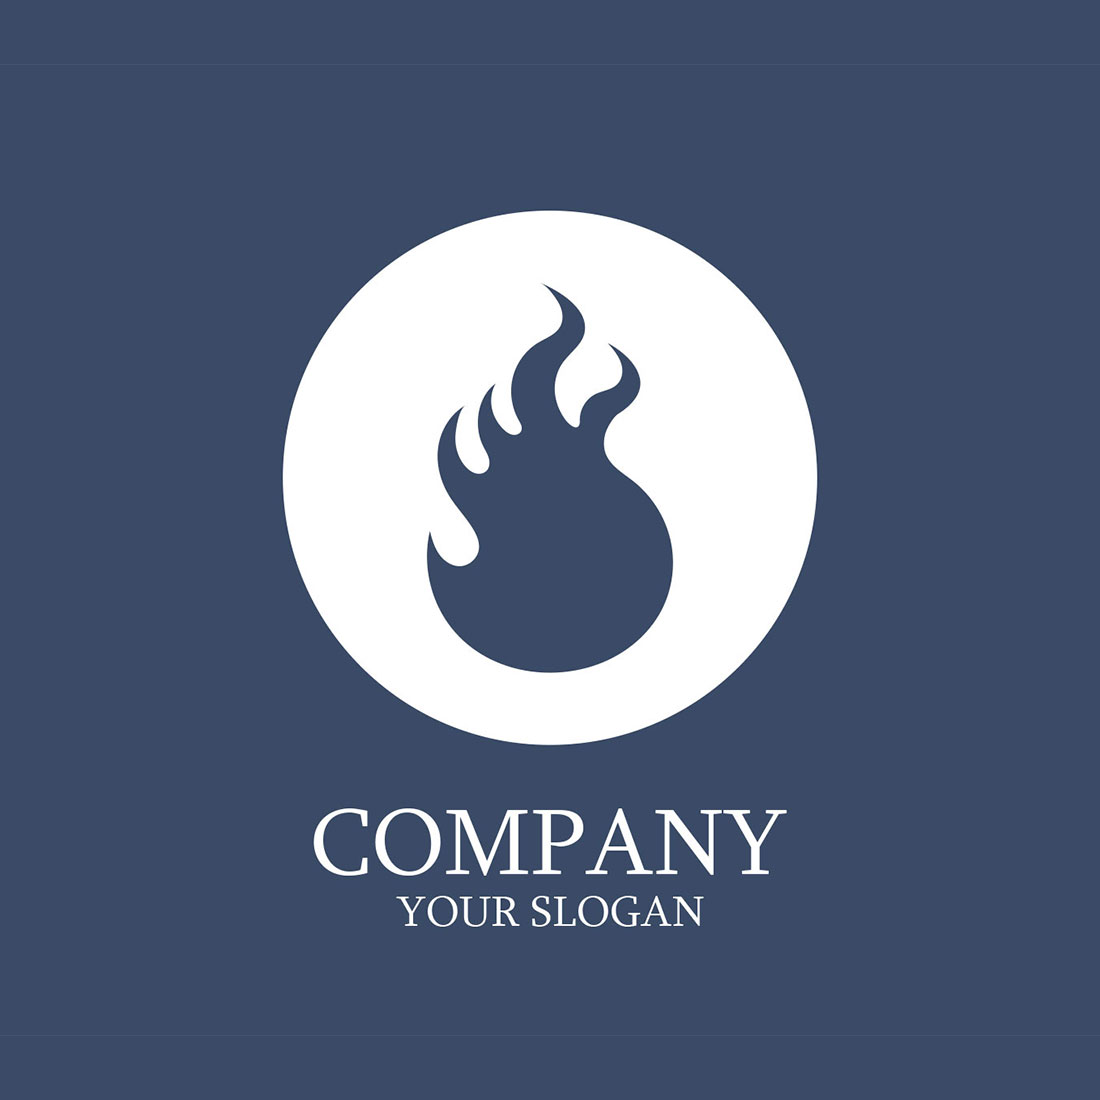 Lit Fire Flame Gradient Logo Vector Illustration cover image.